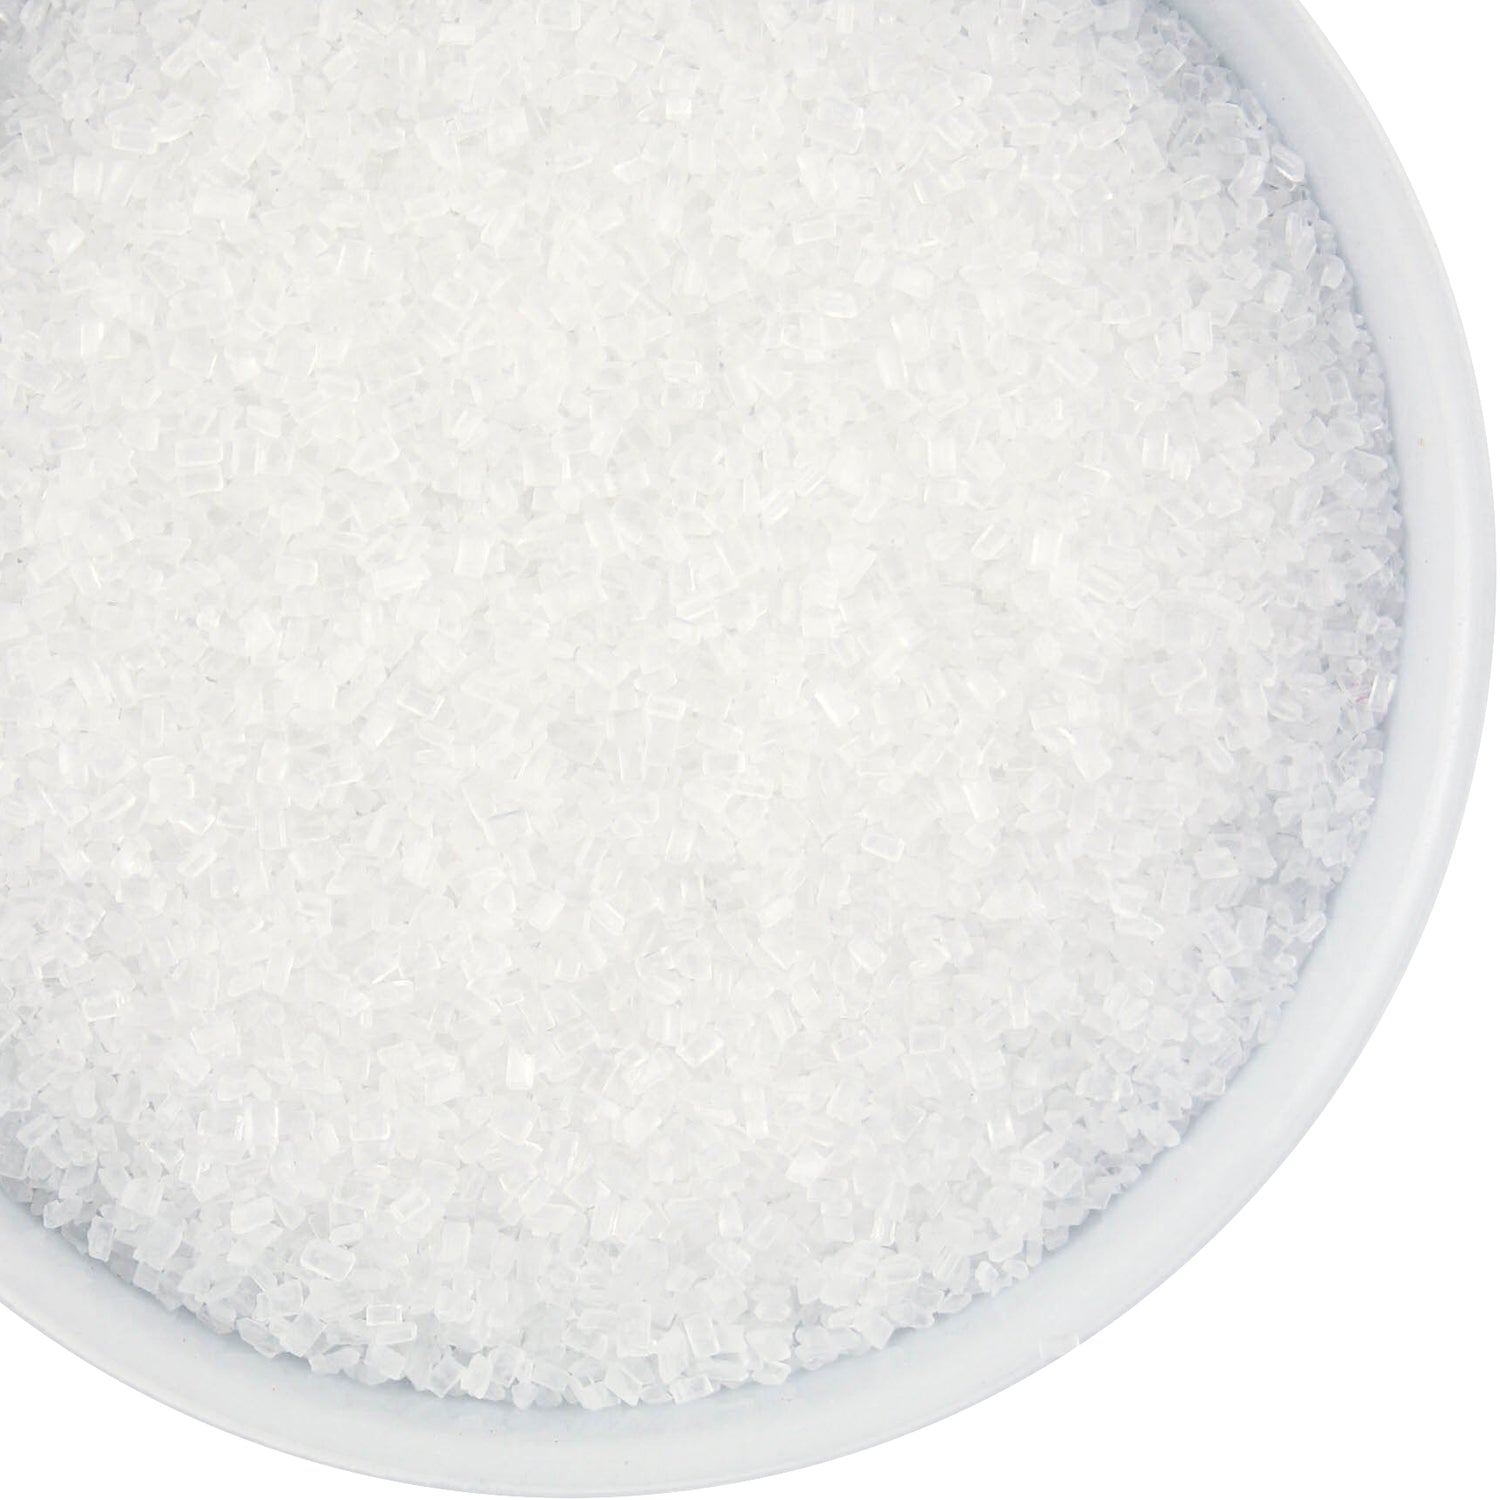 picture of white coarse sugar crystals